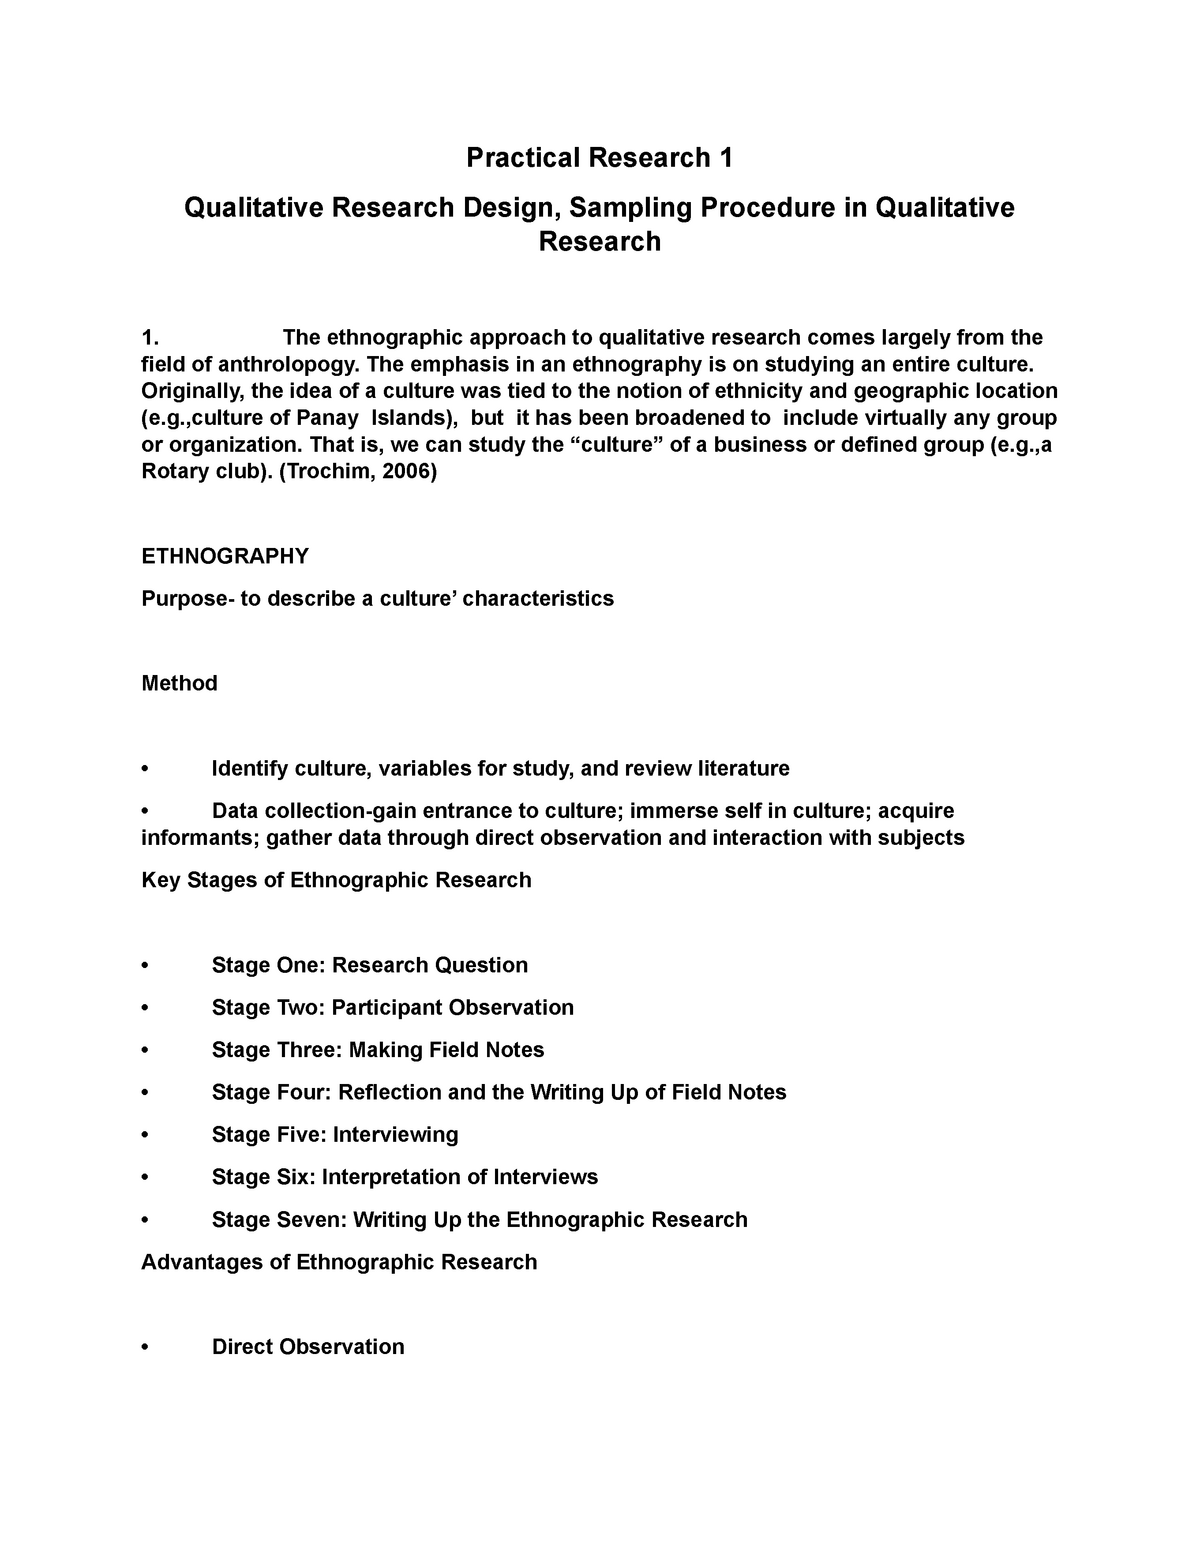 qualitative research in practical research 1